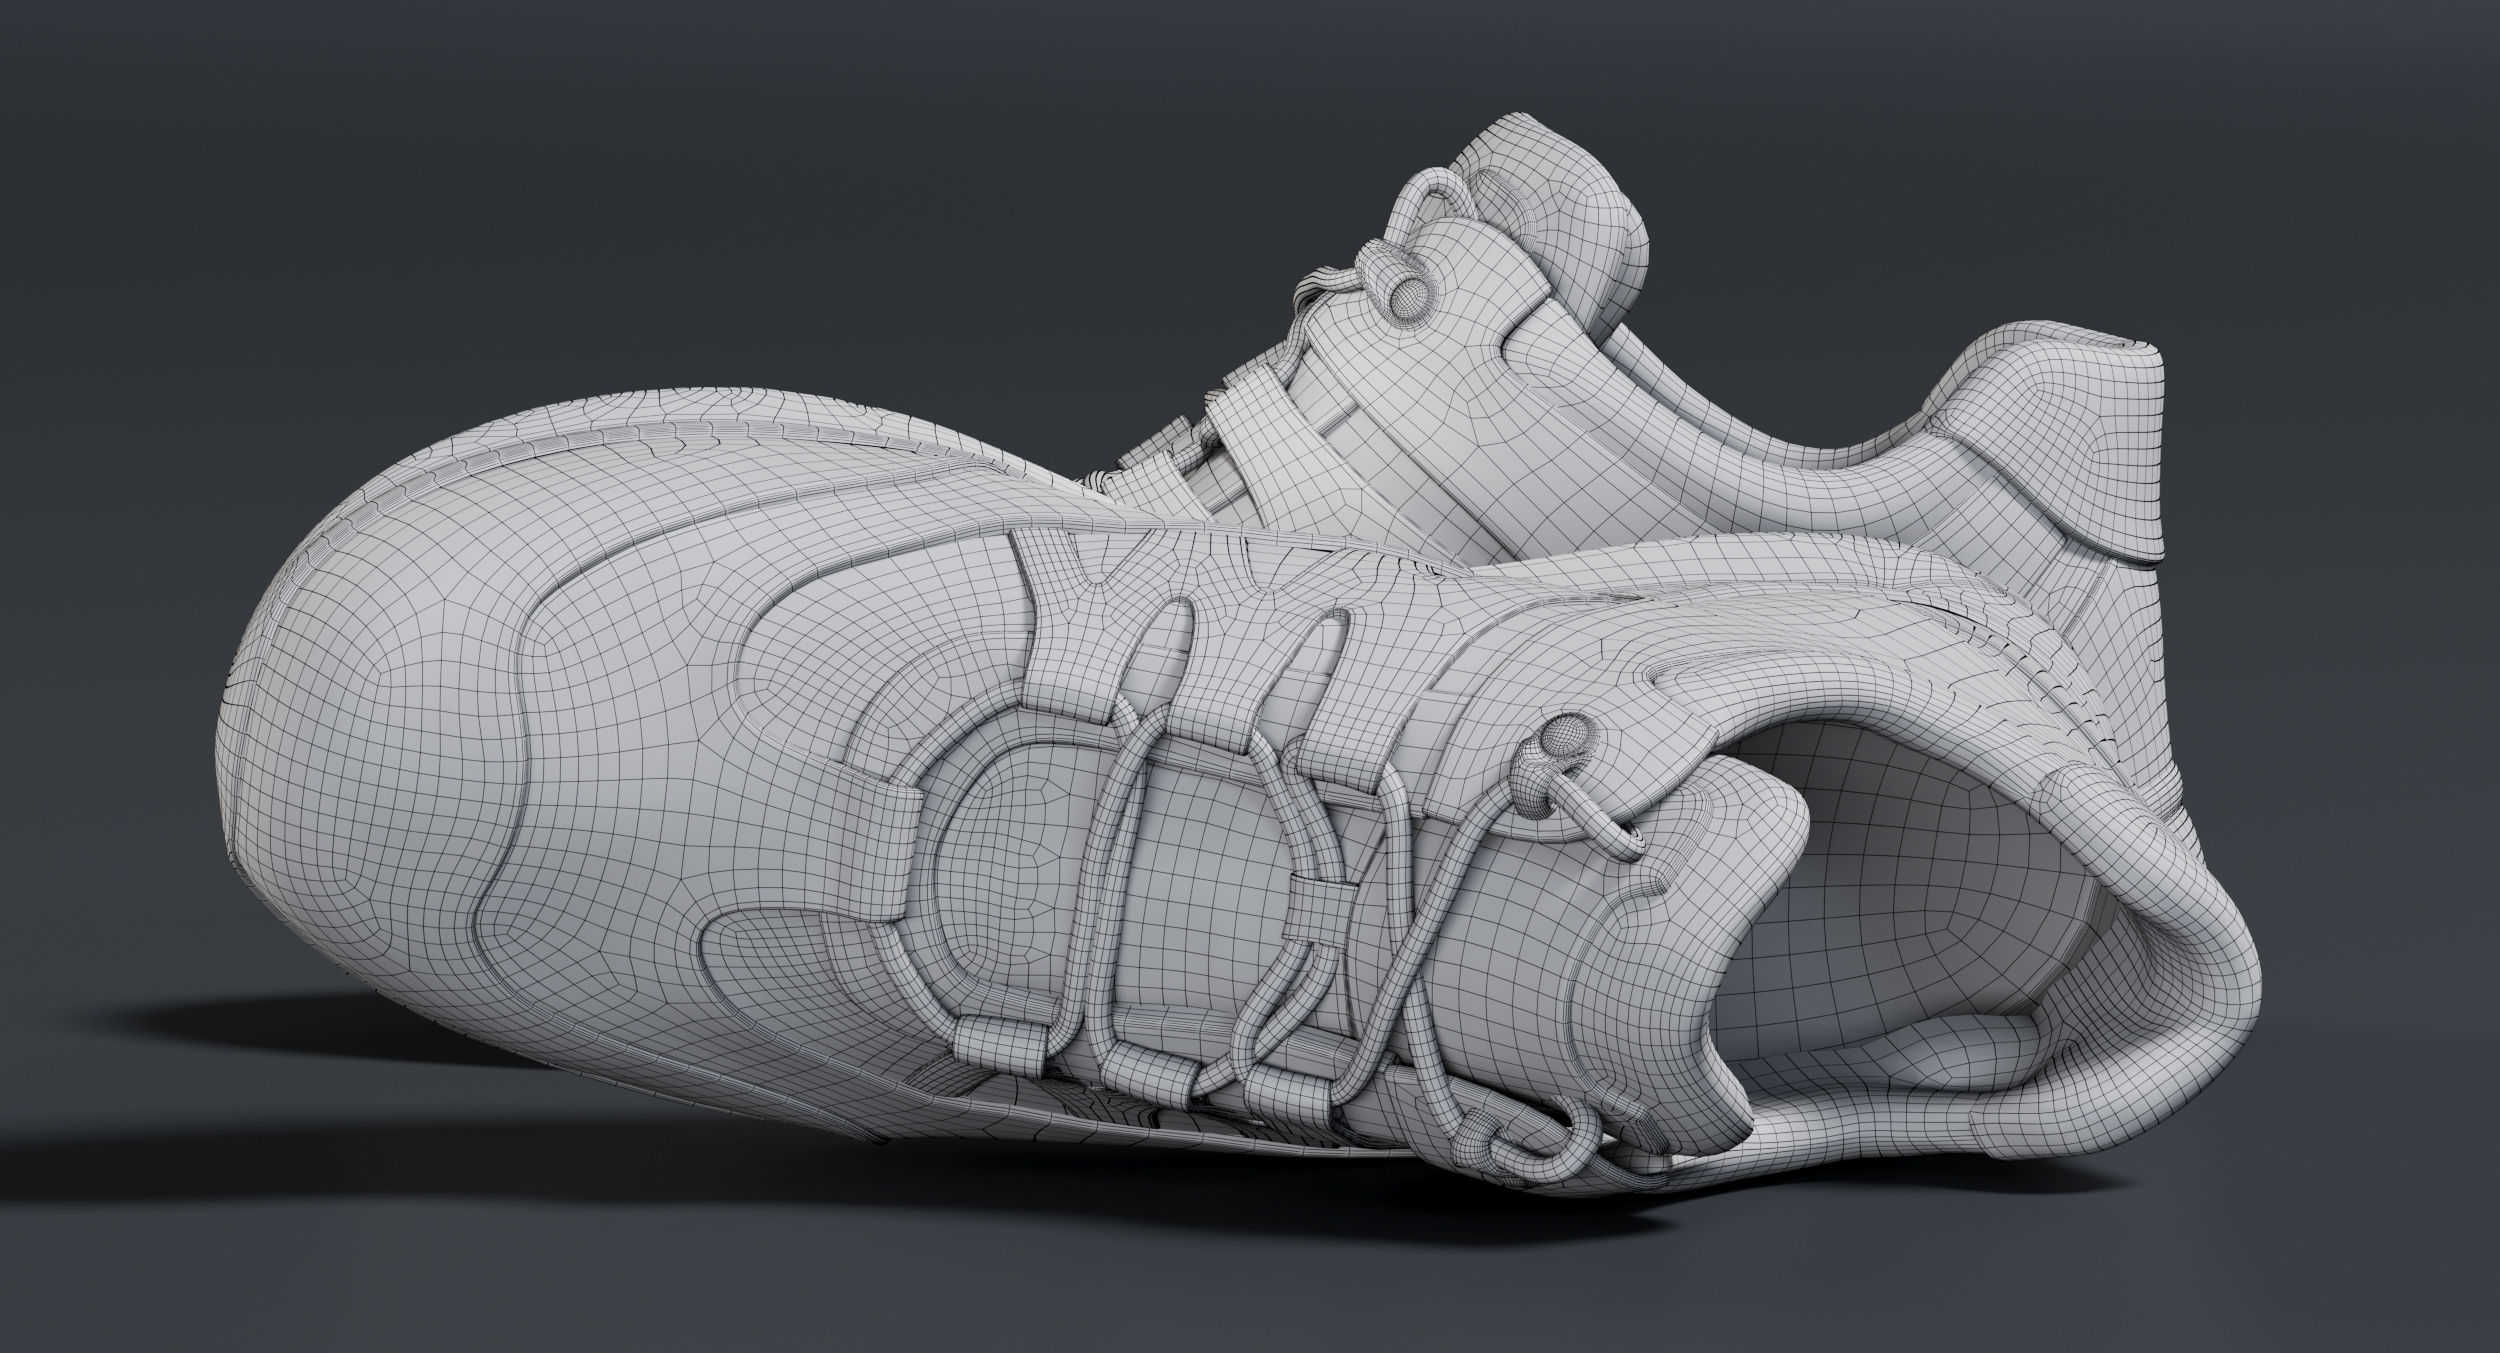 Realistic shoes 2 3D model - TurboSquid 1435422